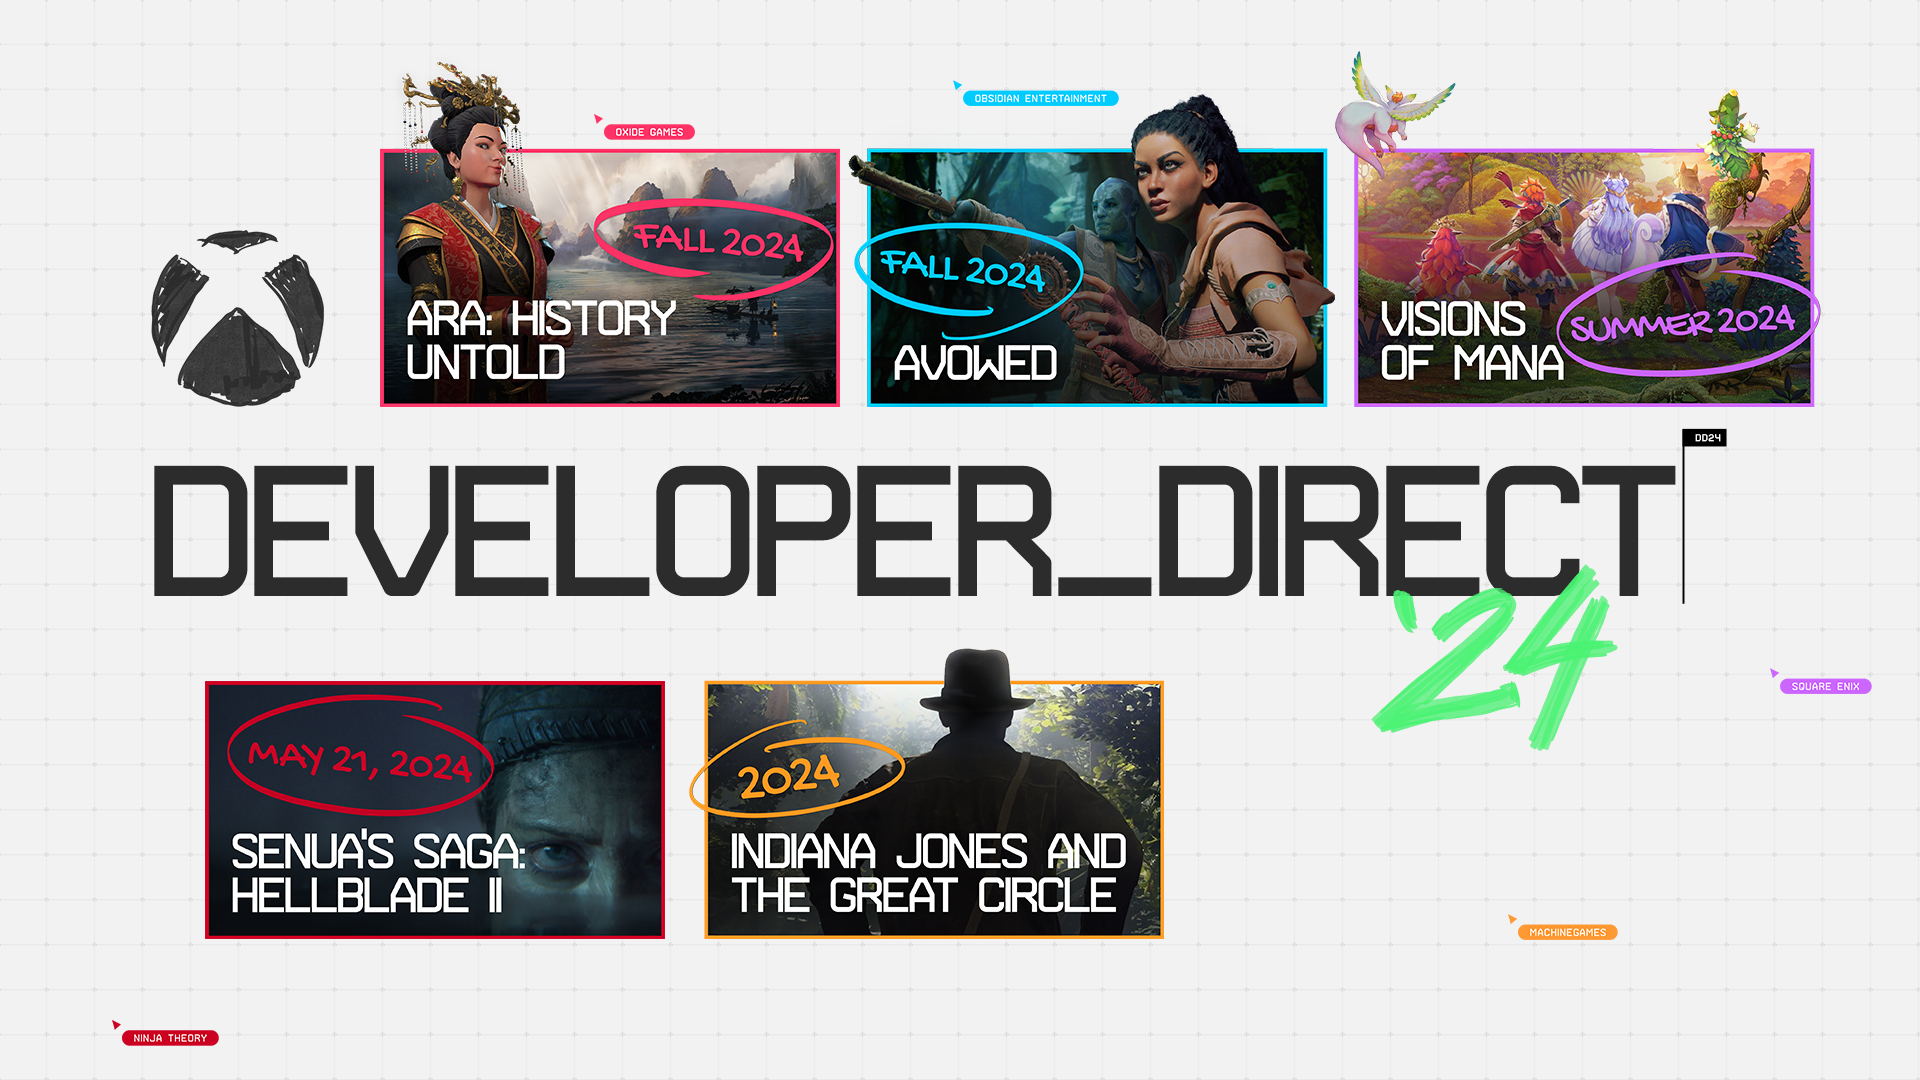 Developer_Direct Hero Image